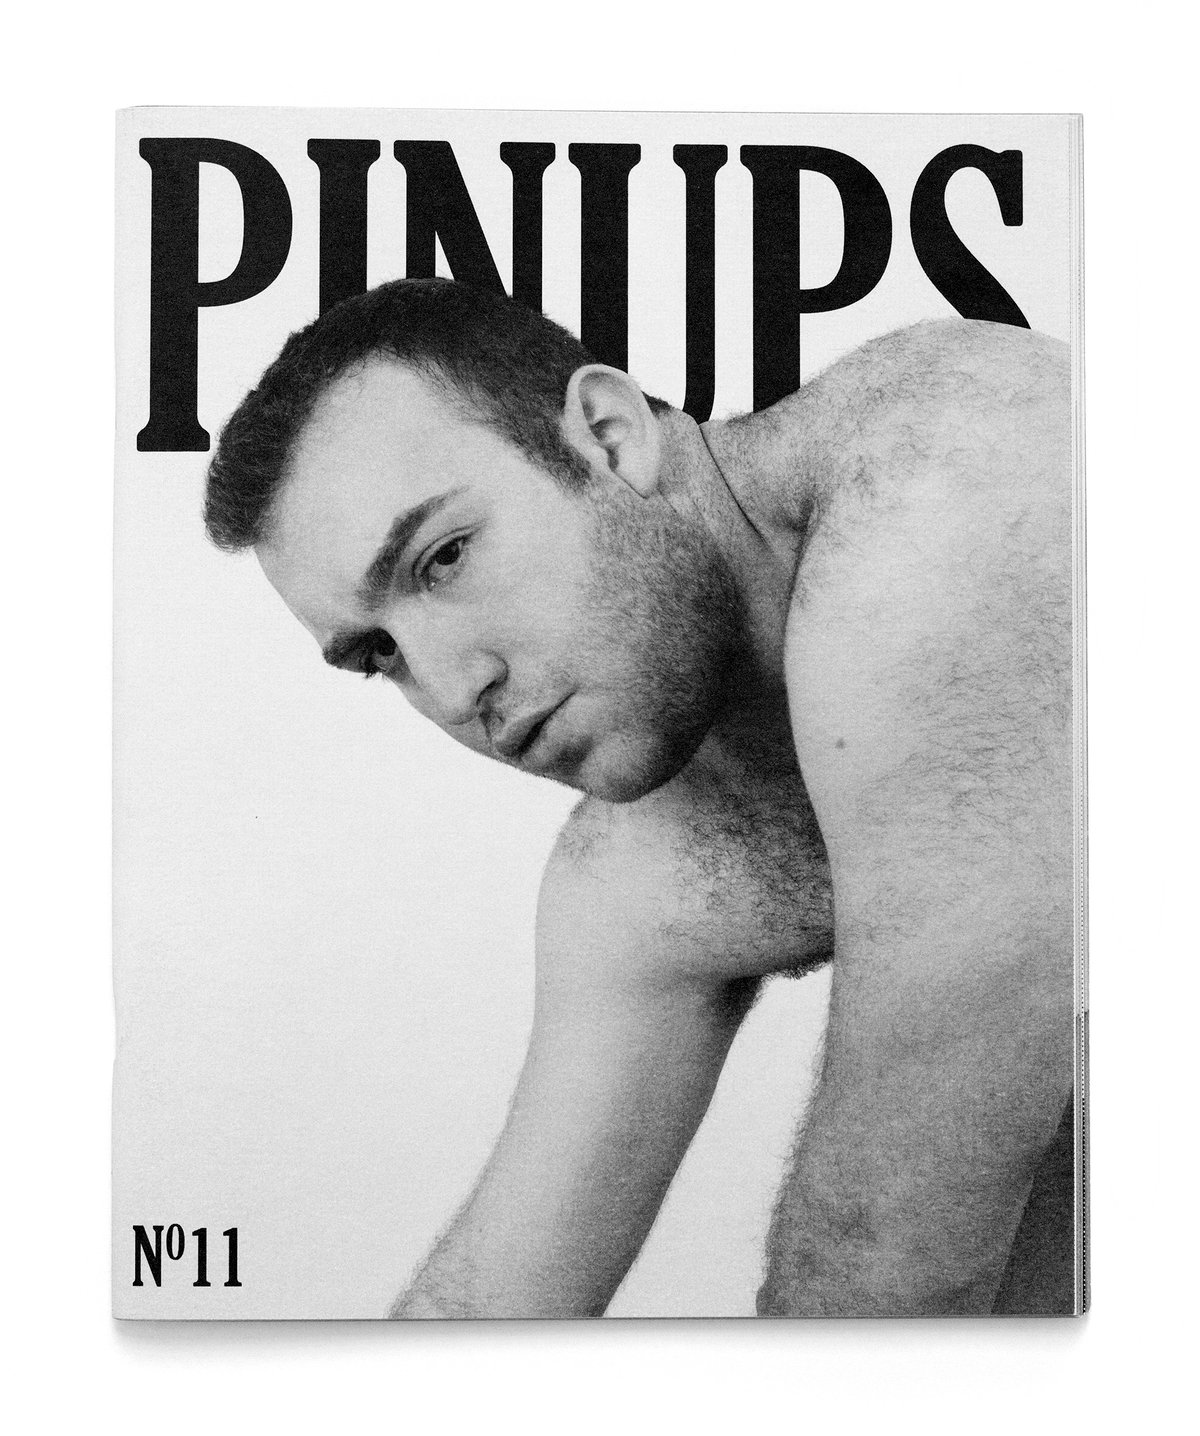 Image of Pinups Nº11